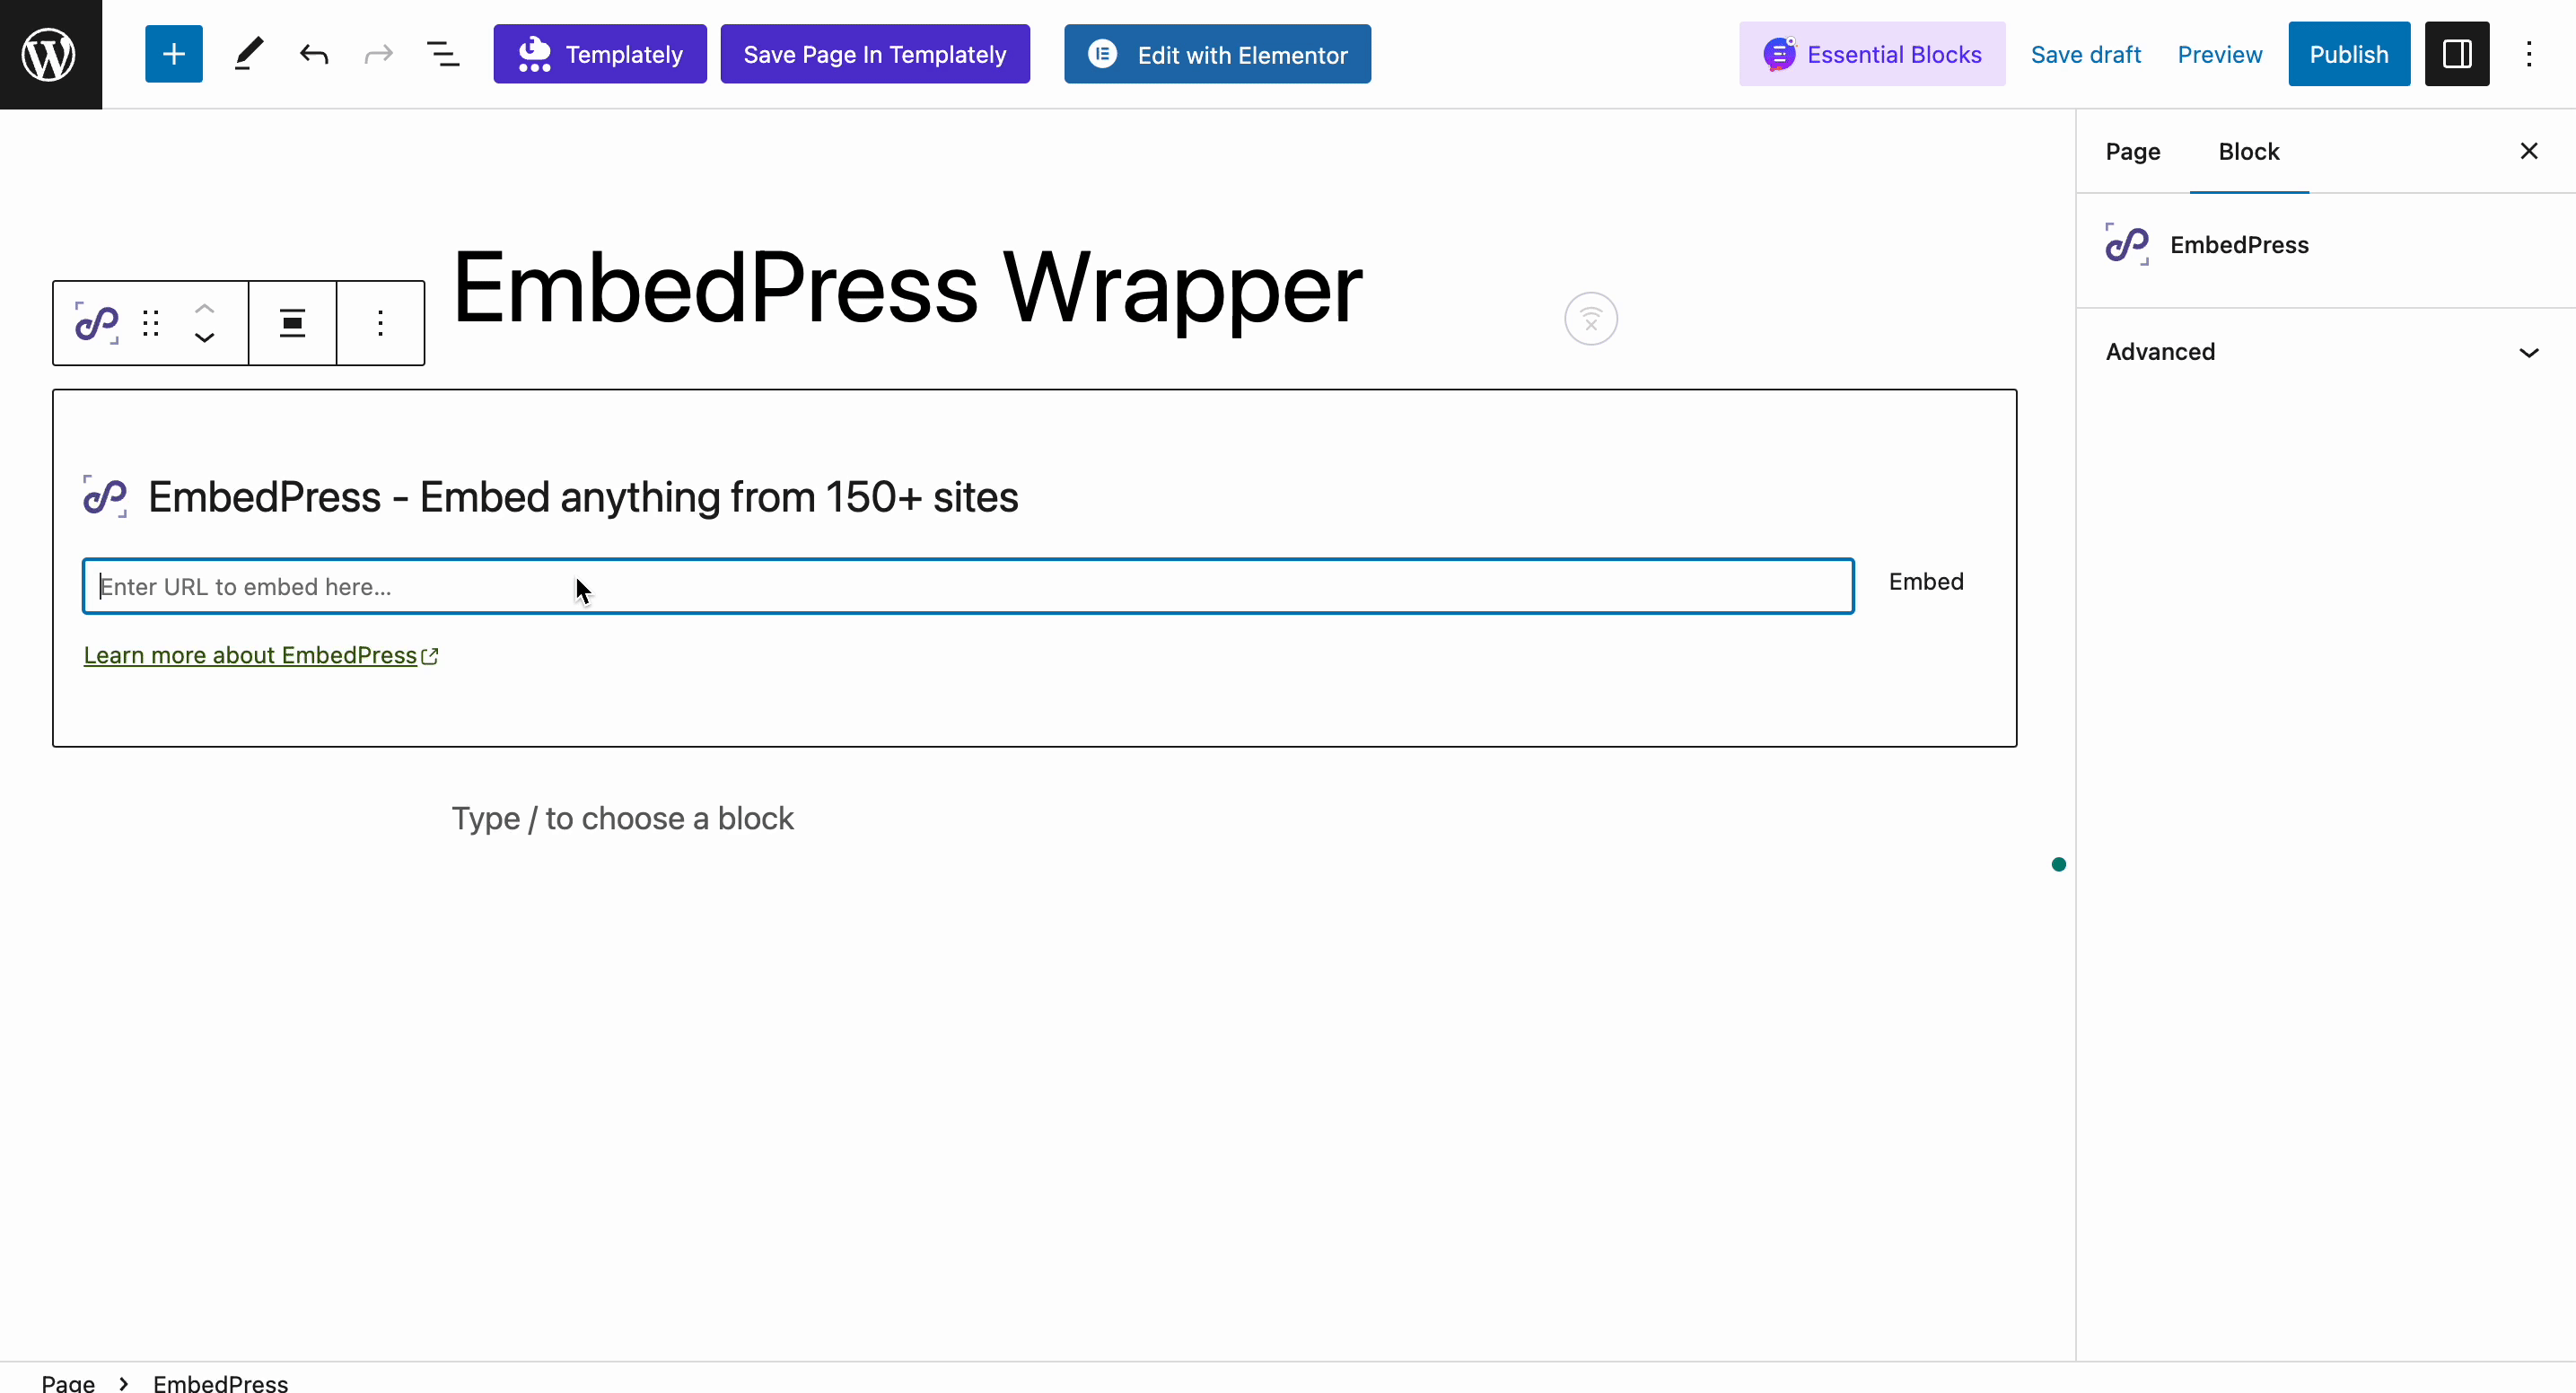 EmbedPress Wrapper